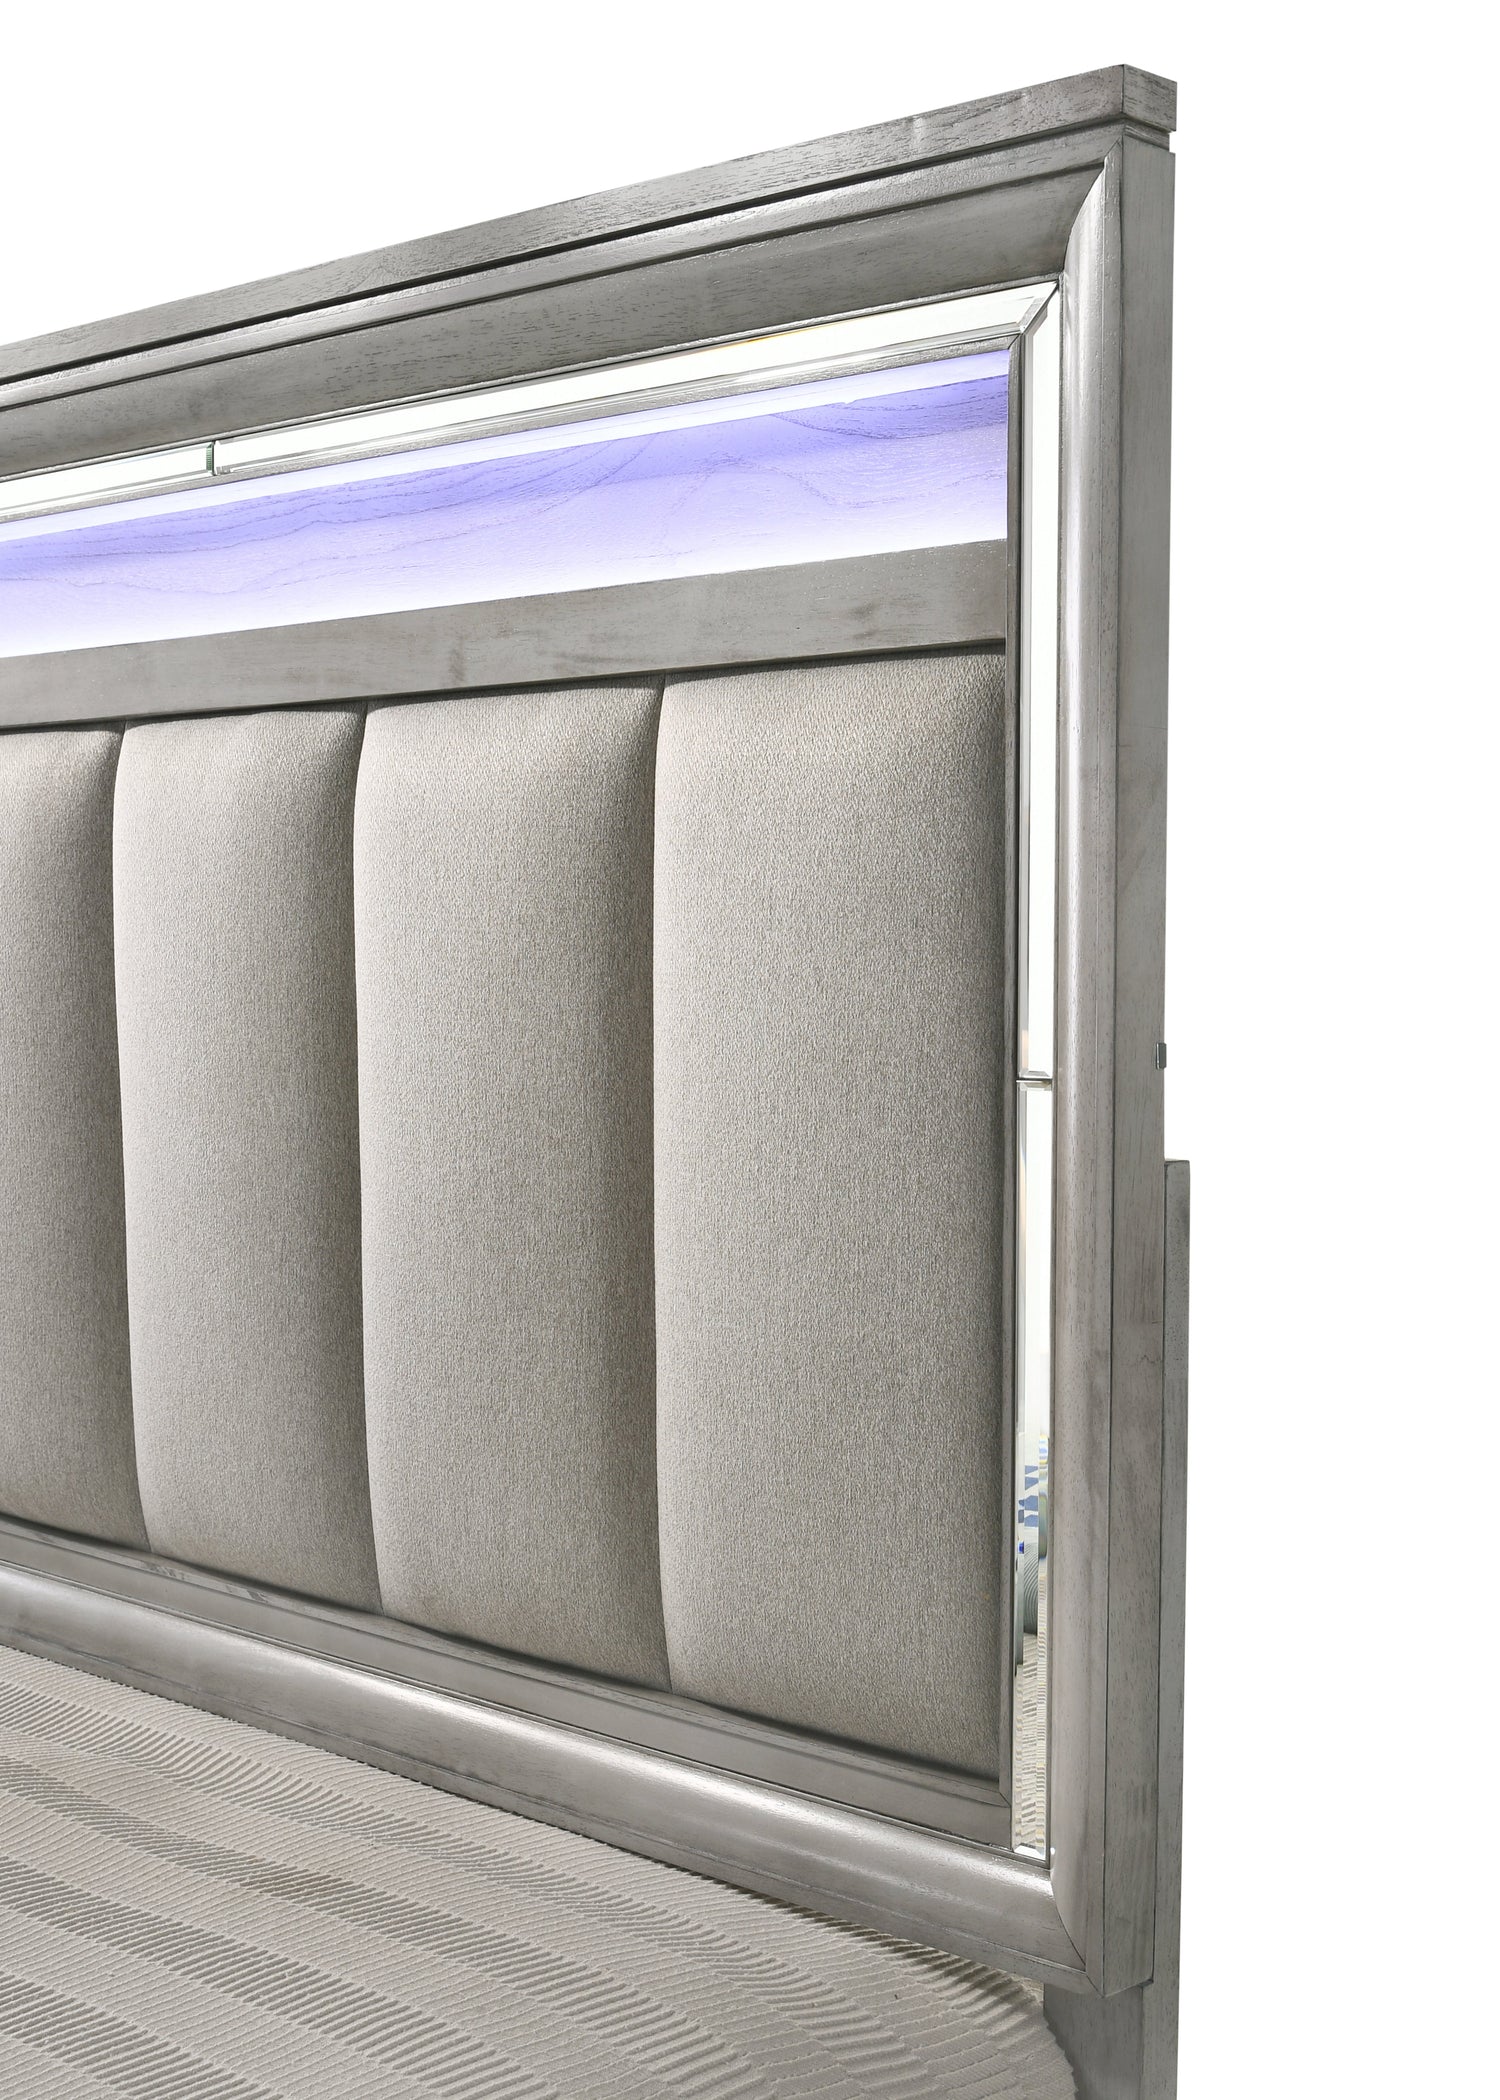 Vail Gray King LED Upholstered Panel Bed - SET | B7200-K-HB | B7200-K-FB | B7200-KQ-RAIL - Bien Home Furniture &amp; Electronics